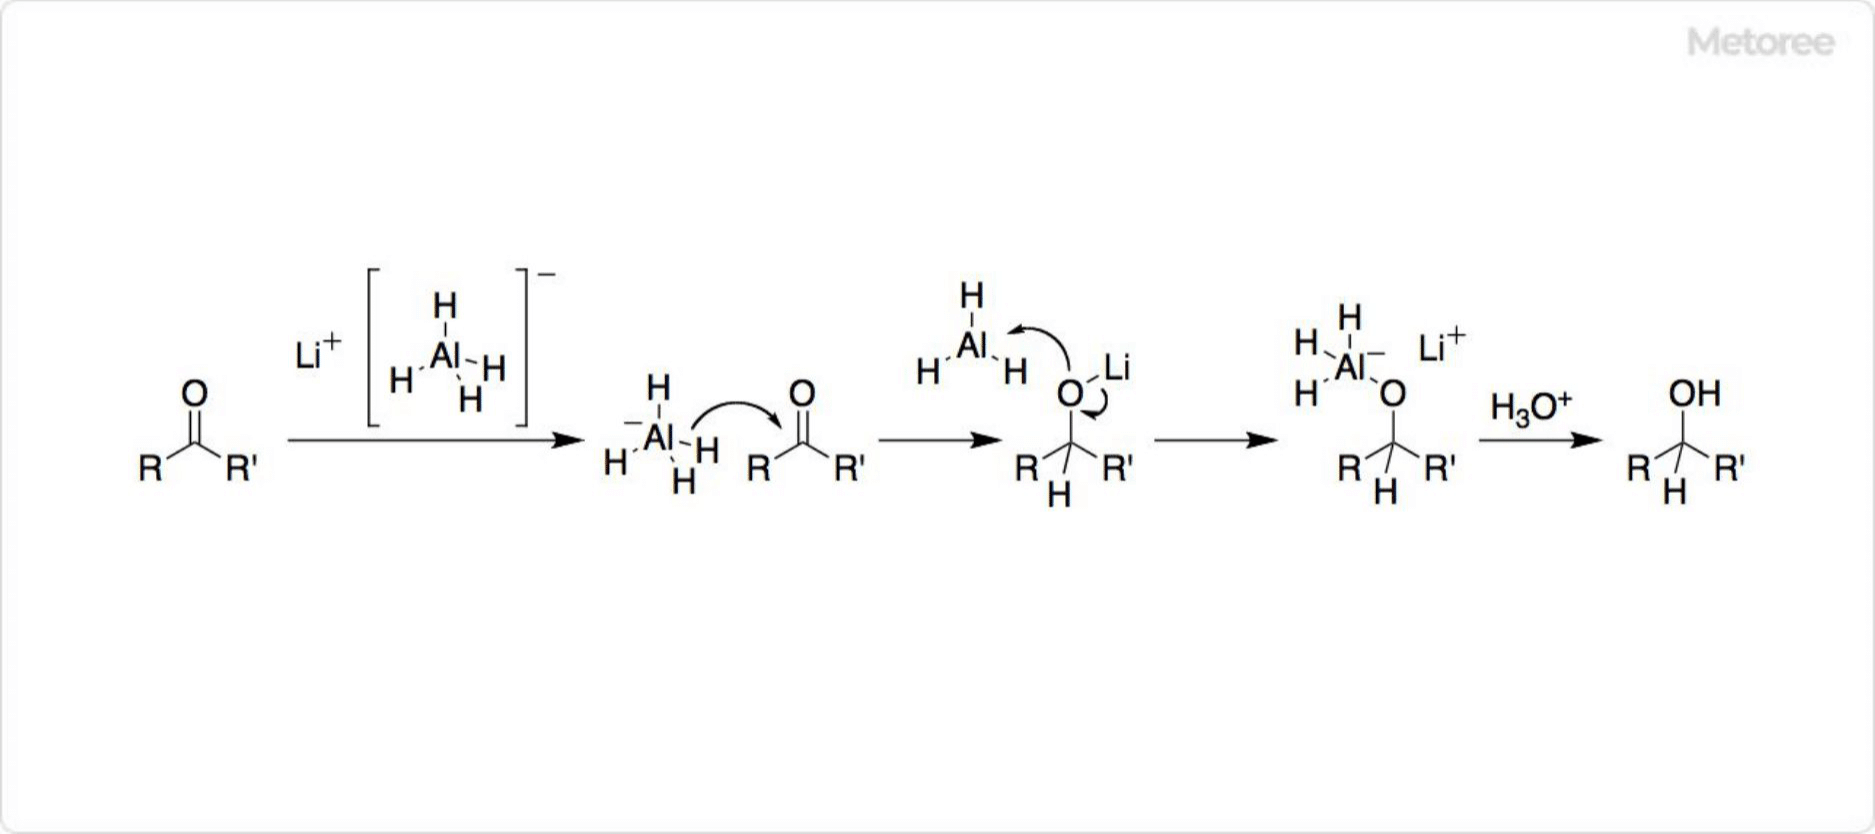 Figure 3. Reaction mechanism of lithium aluminum hydride